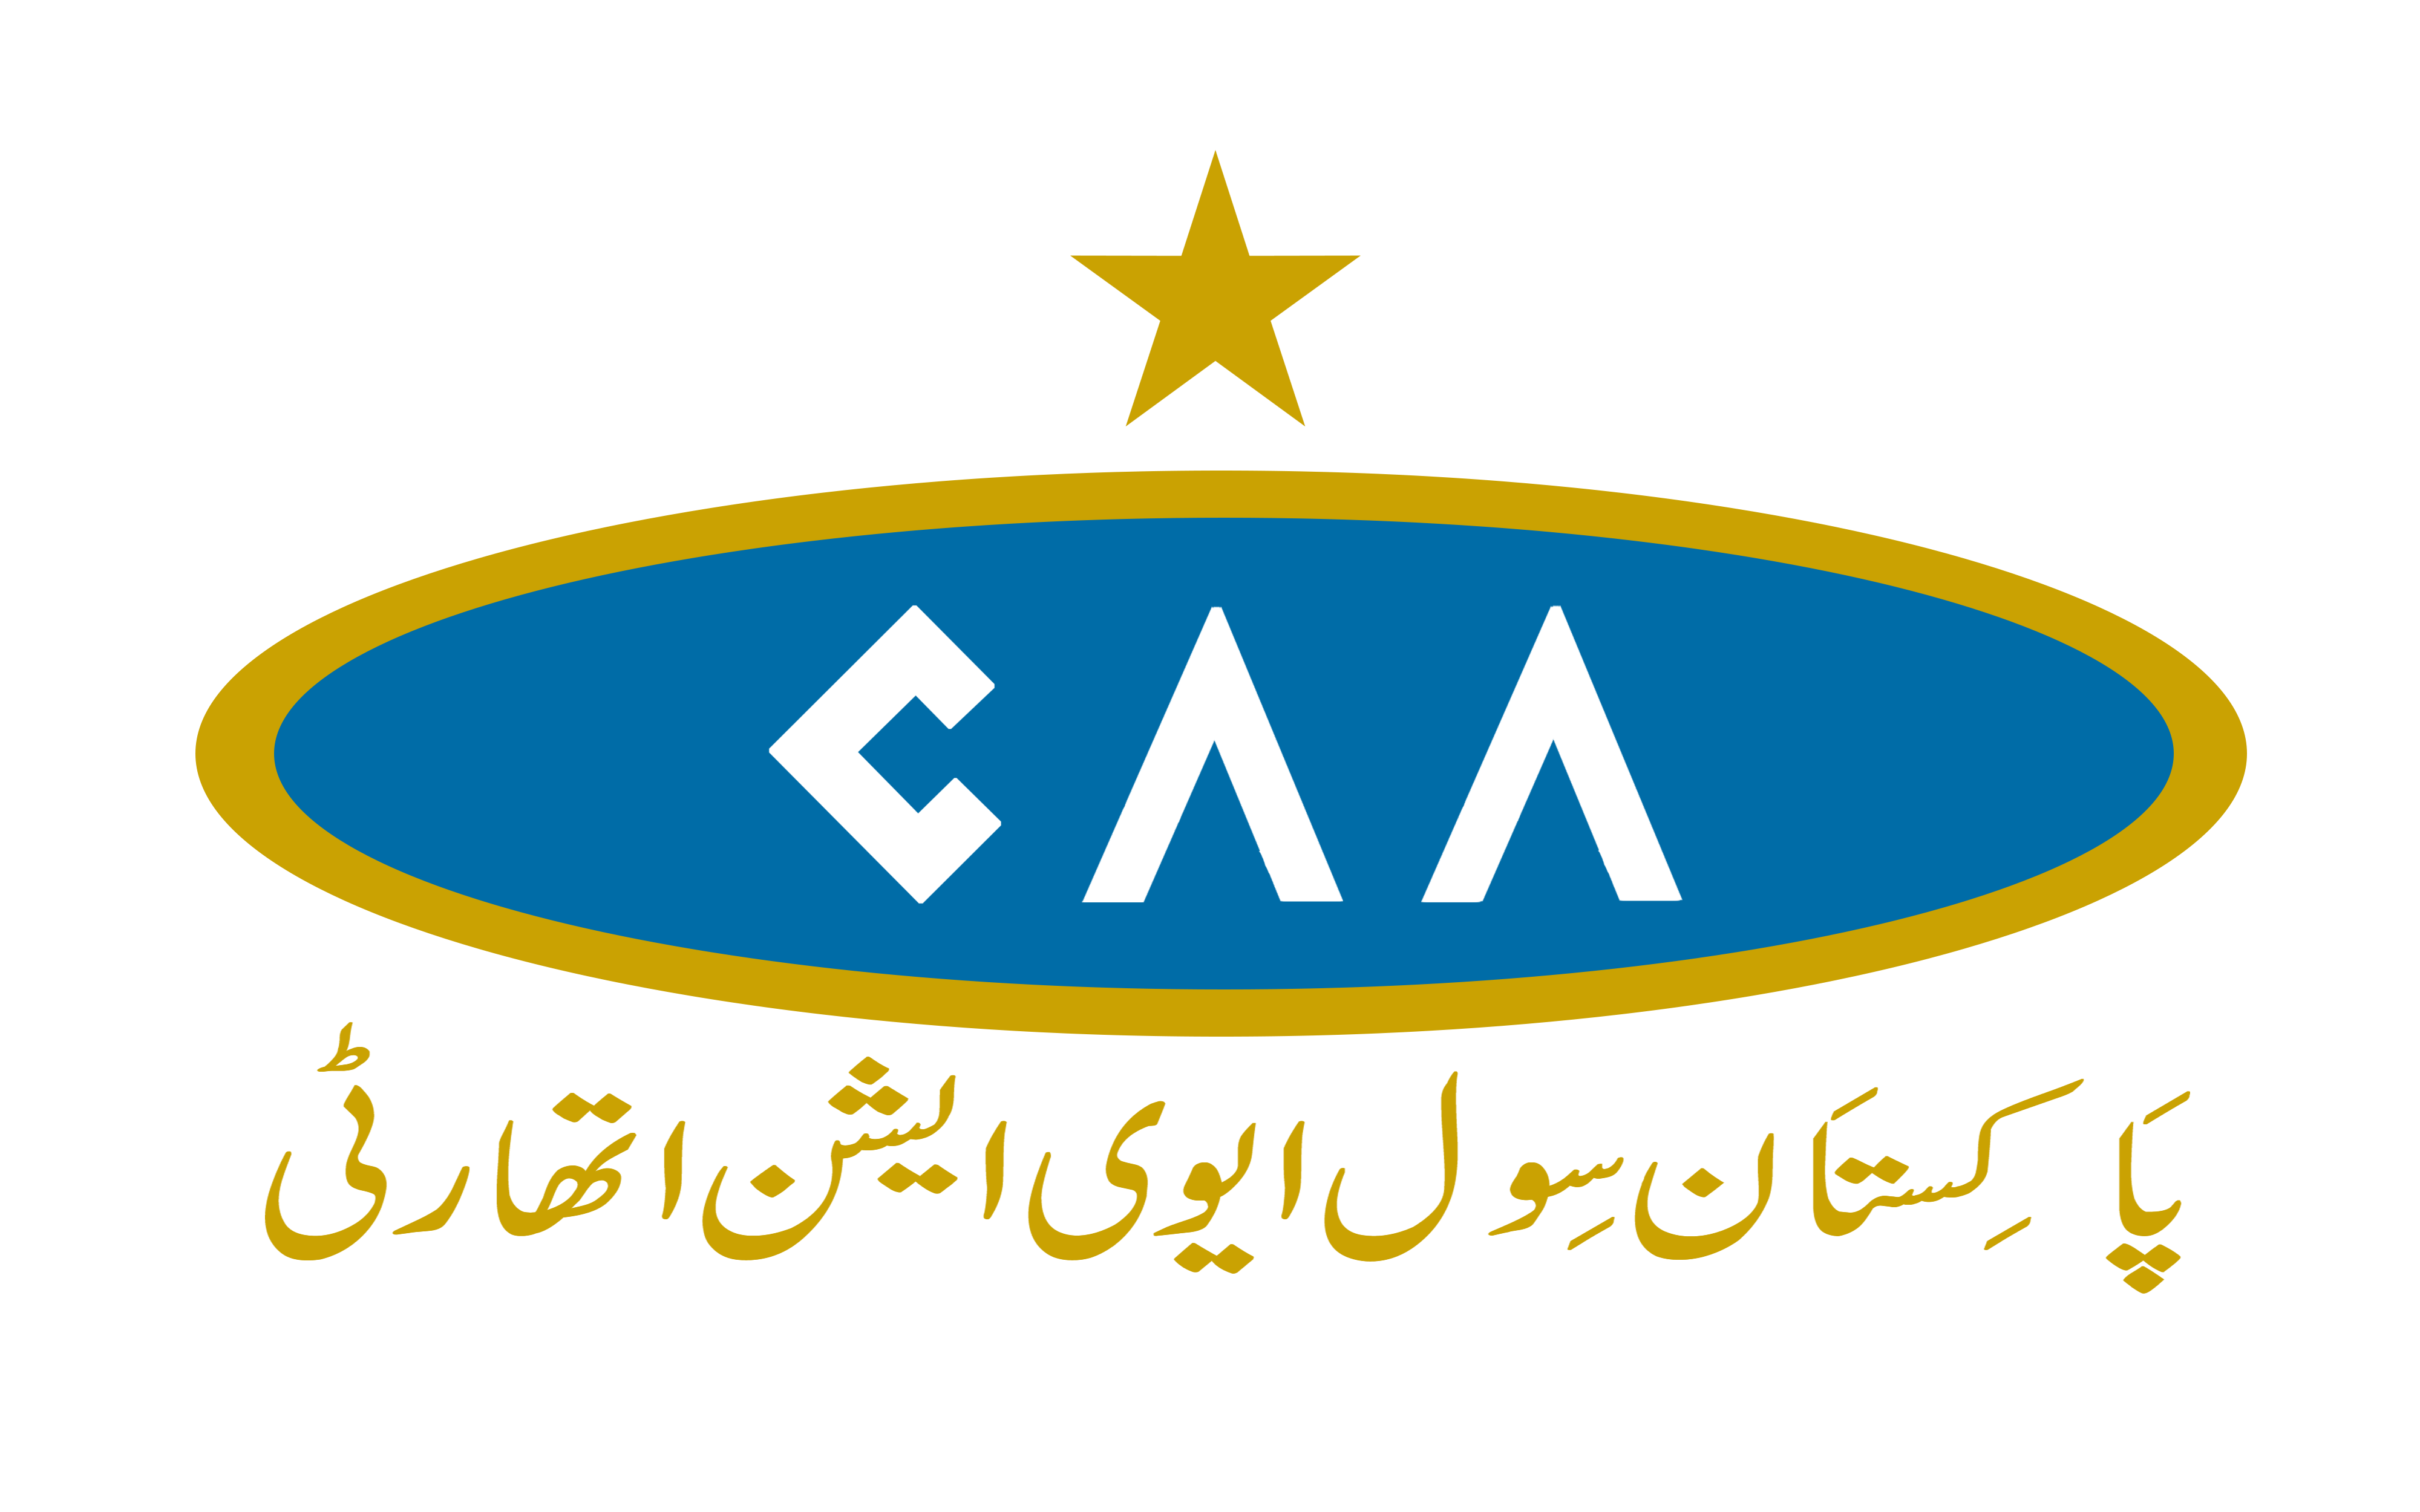 CAA Logo - Pakistan Civil Aviation Authority